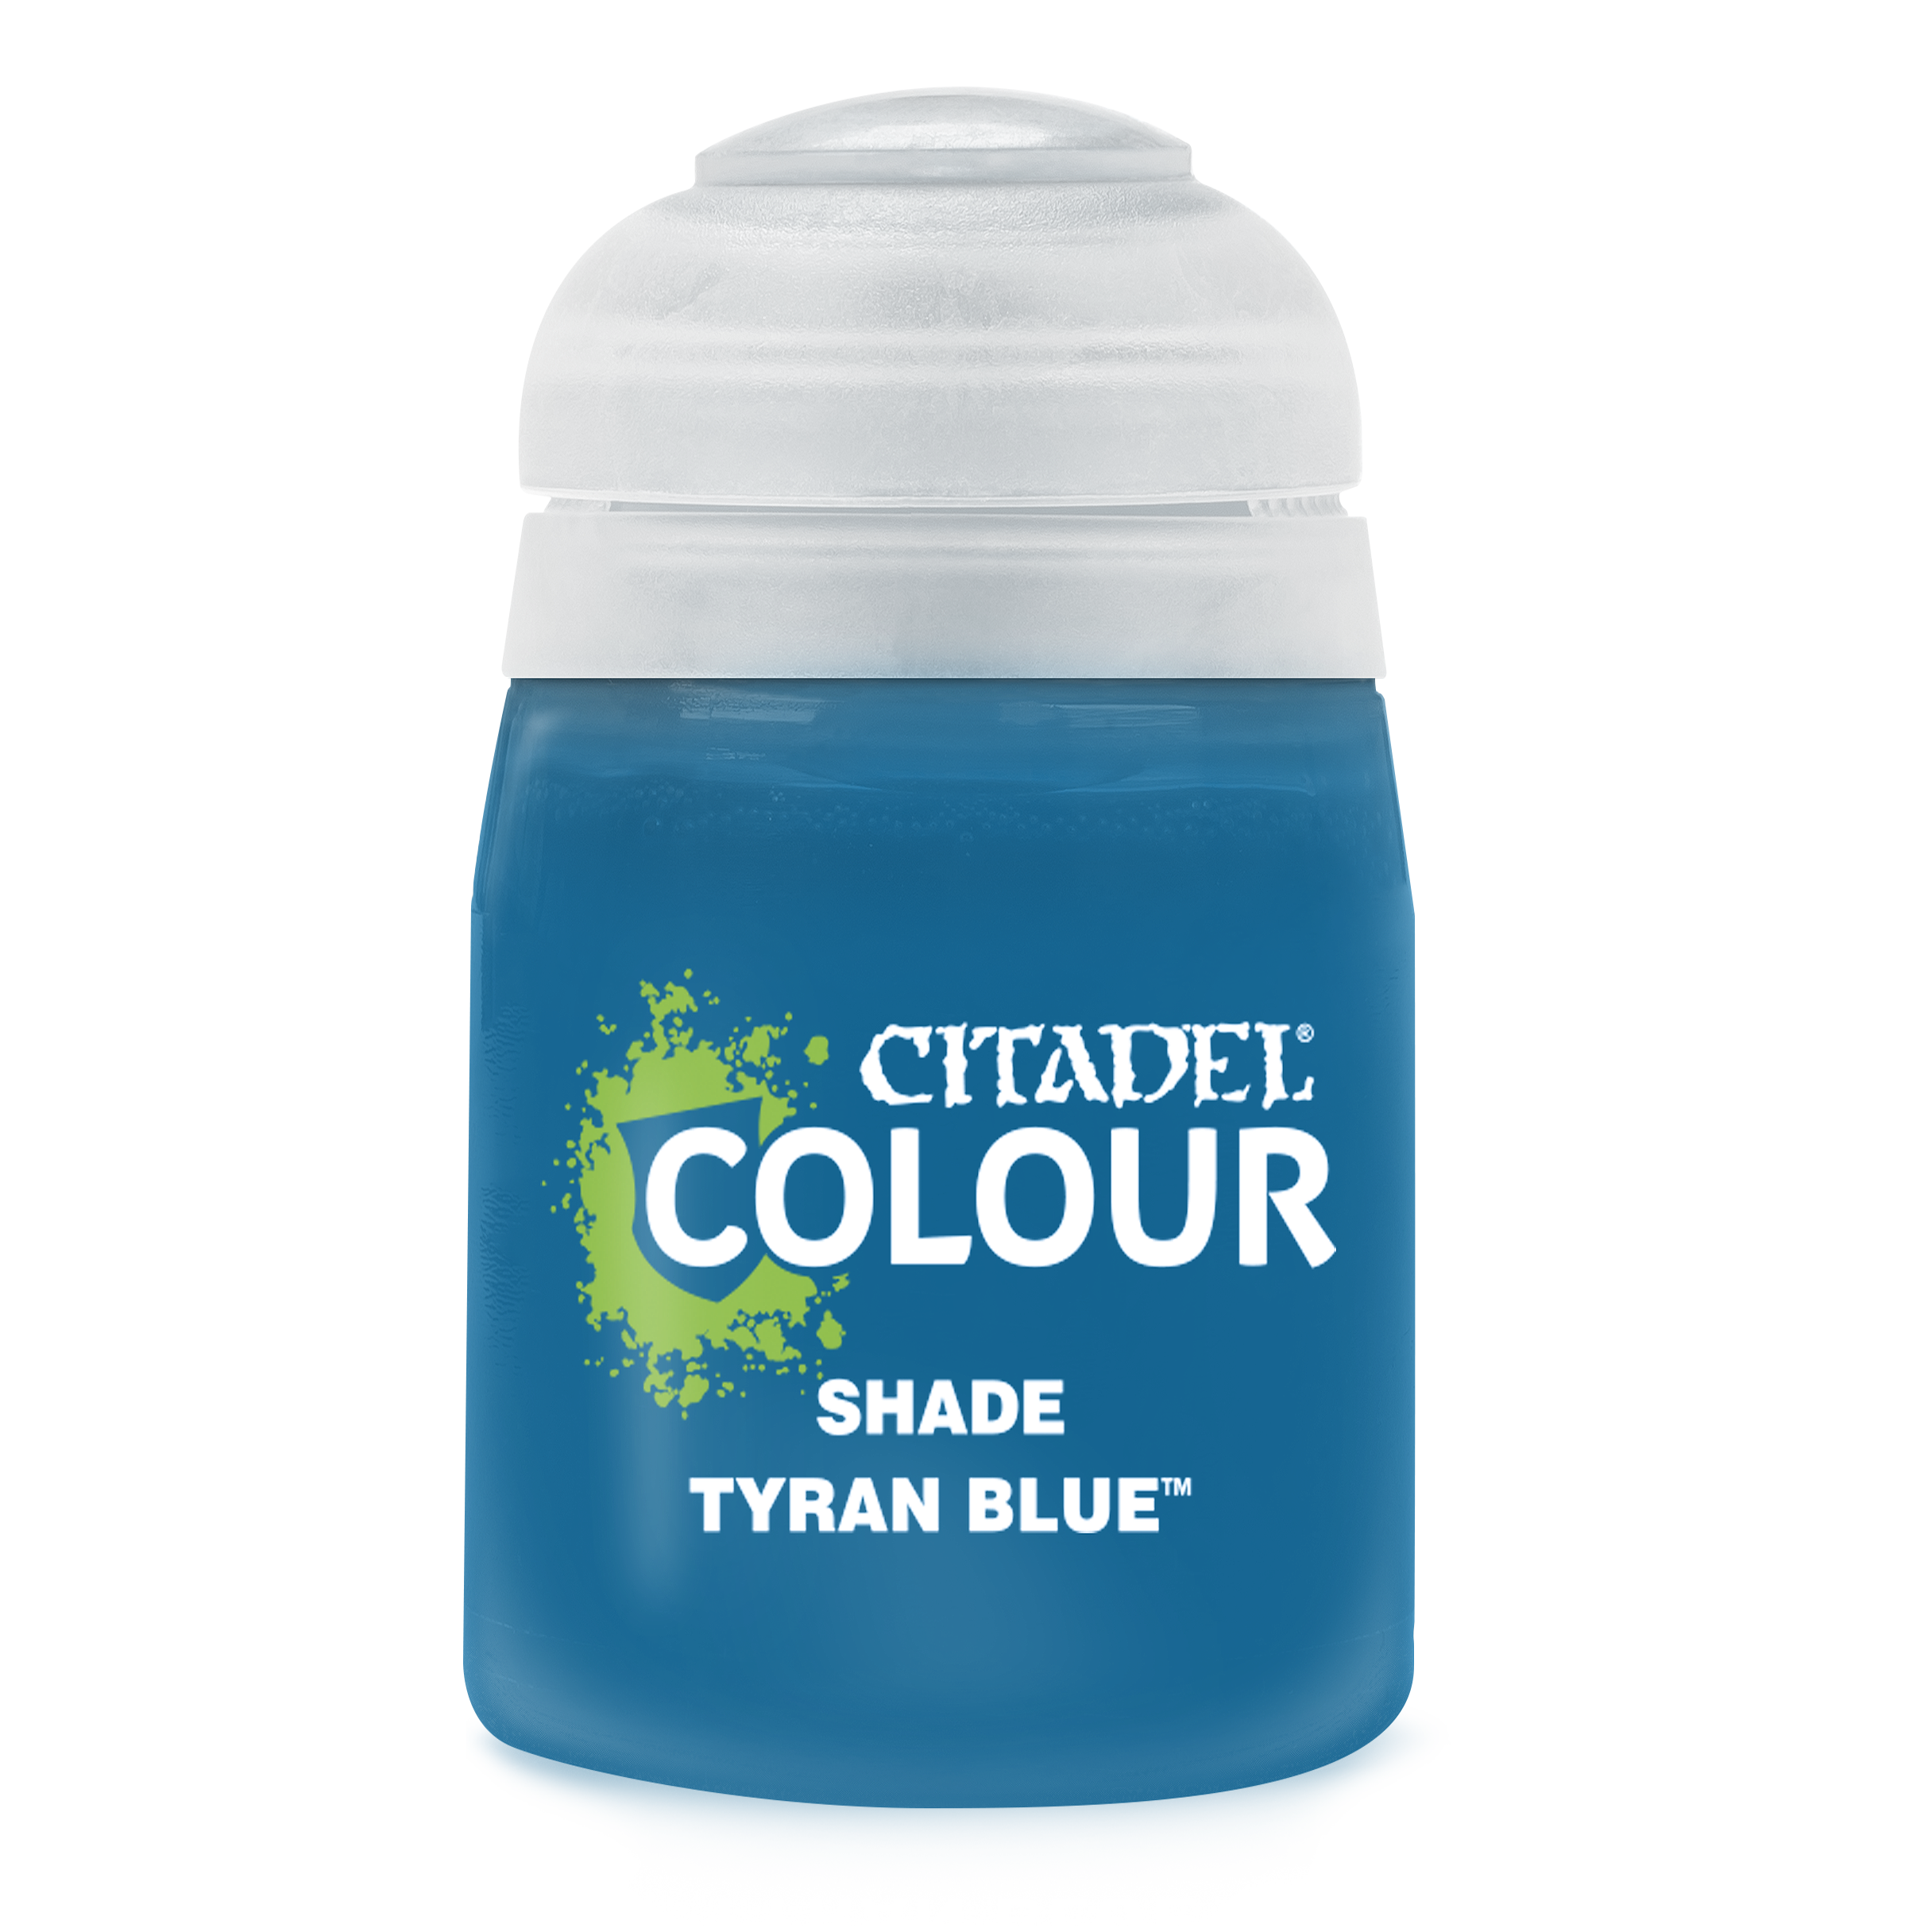 Citadel Shade Tyran Blue